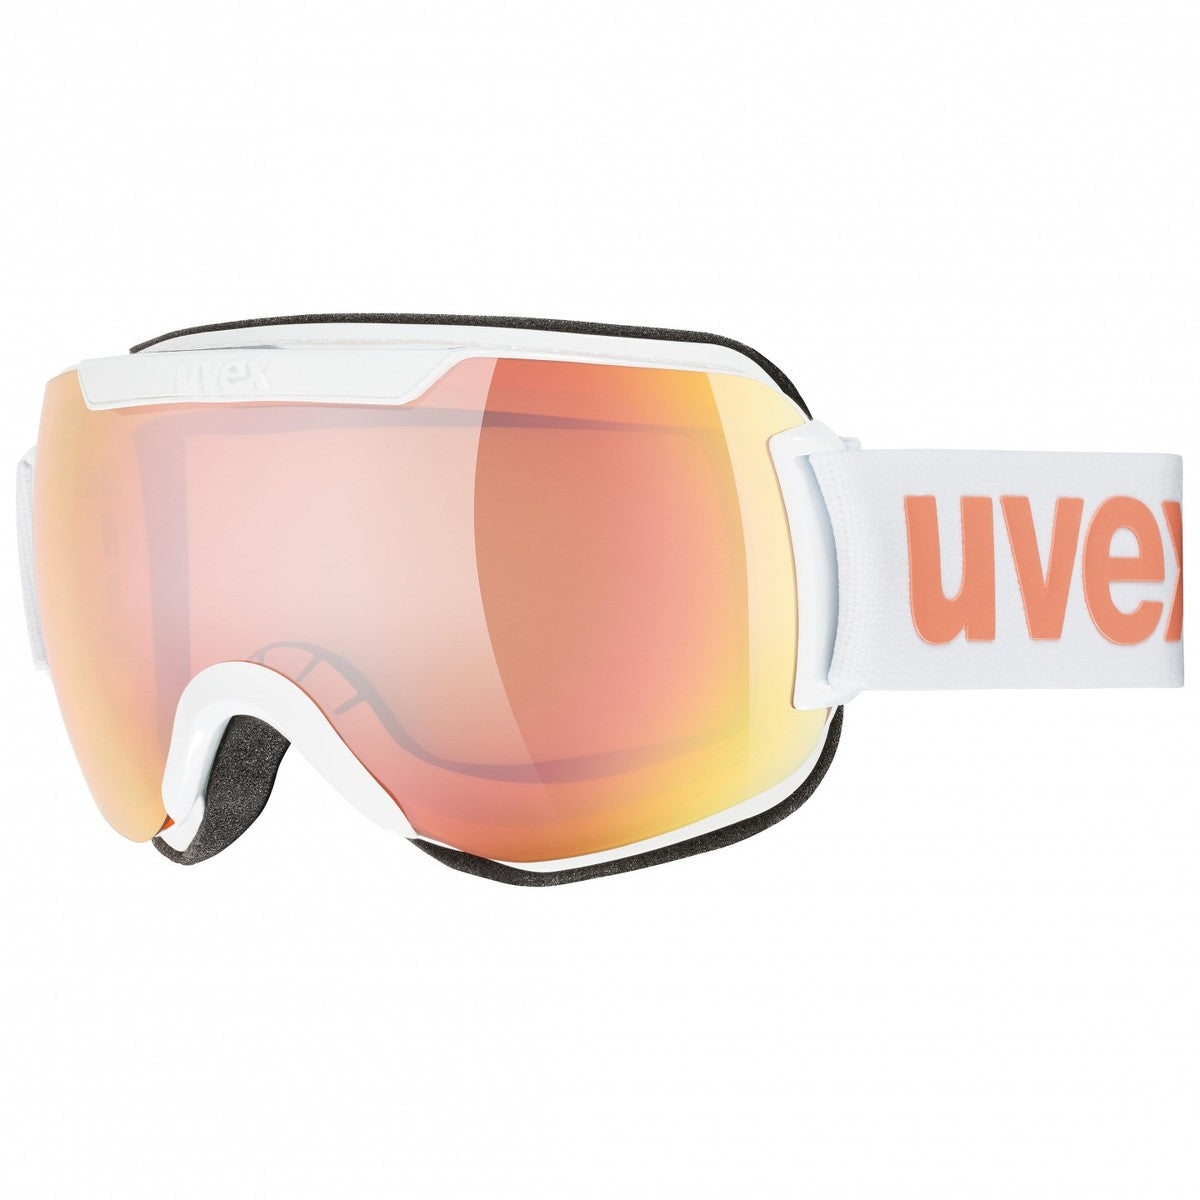 Uvex Downhill 2000 CV S2 skibril wit